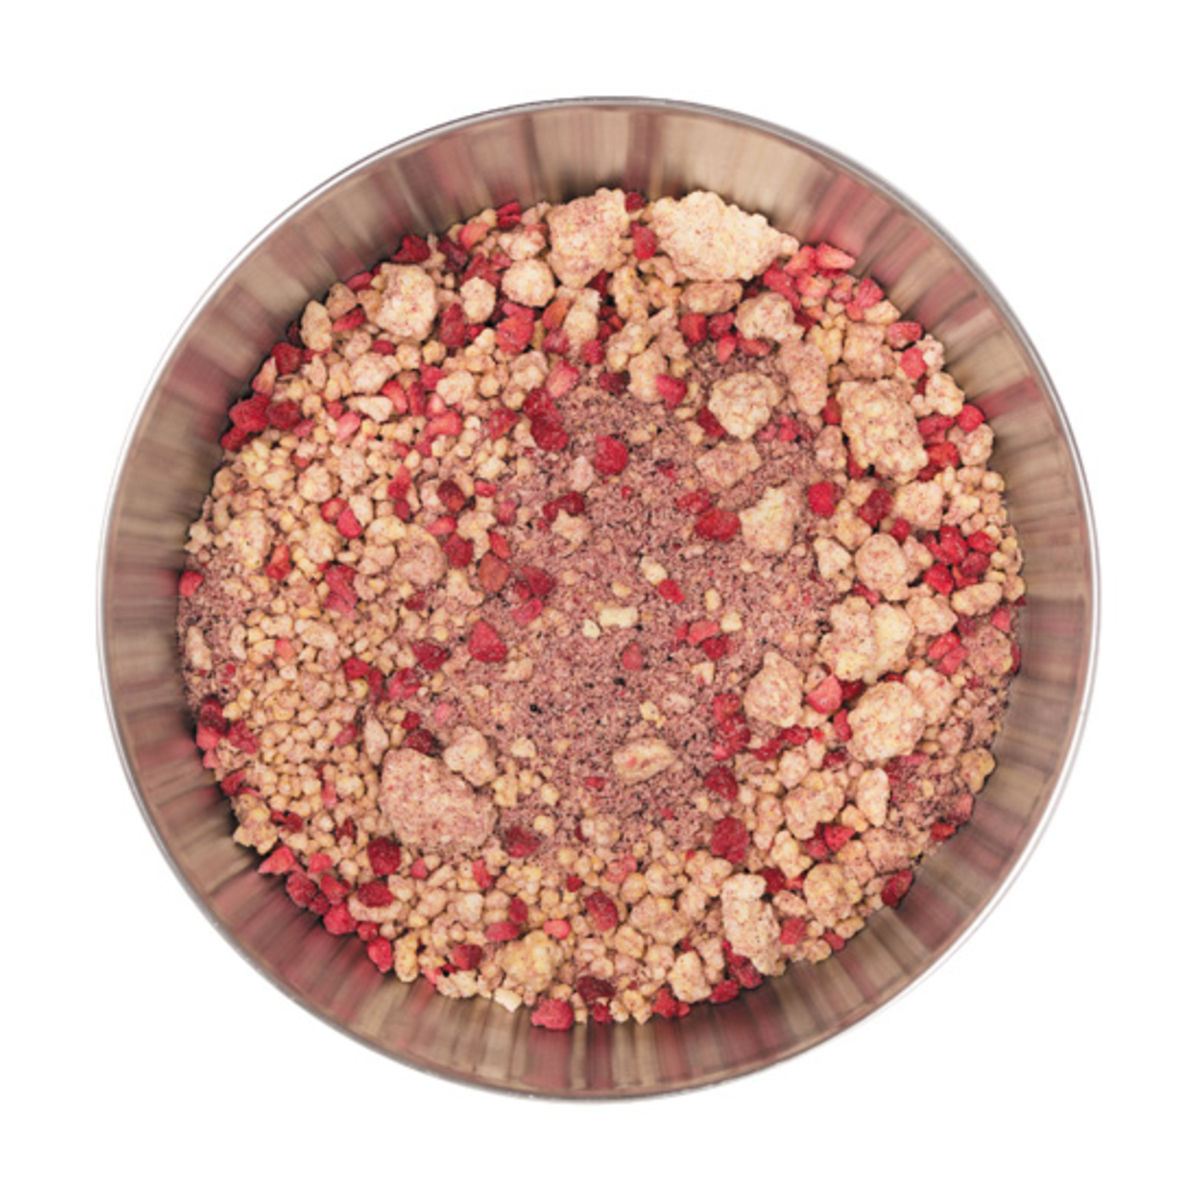 Organic porridge with apple, cranberry, cinnamon and chia seeds